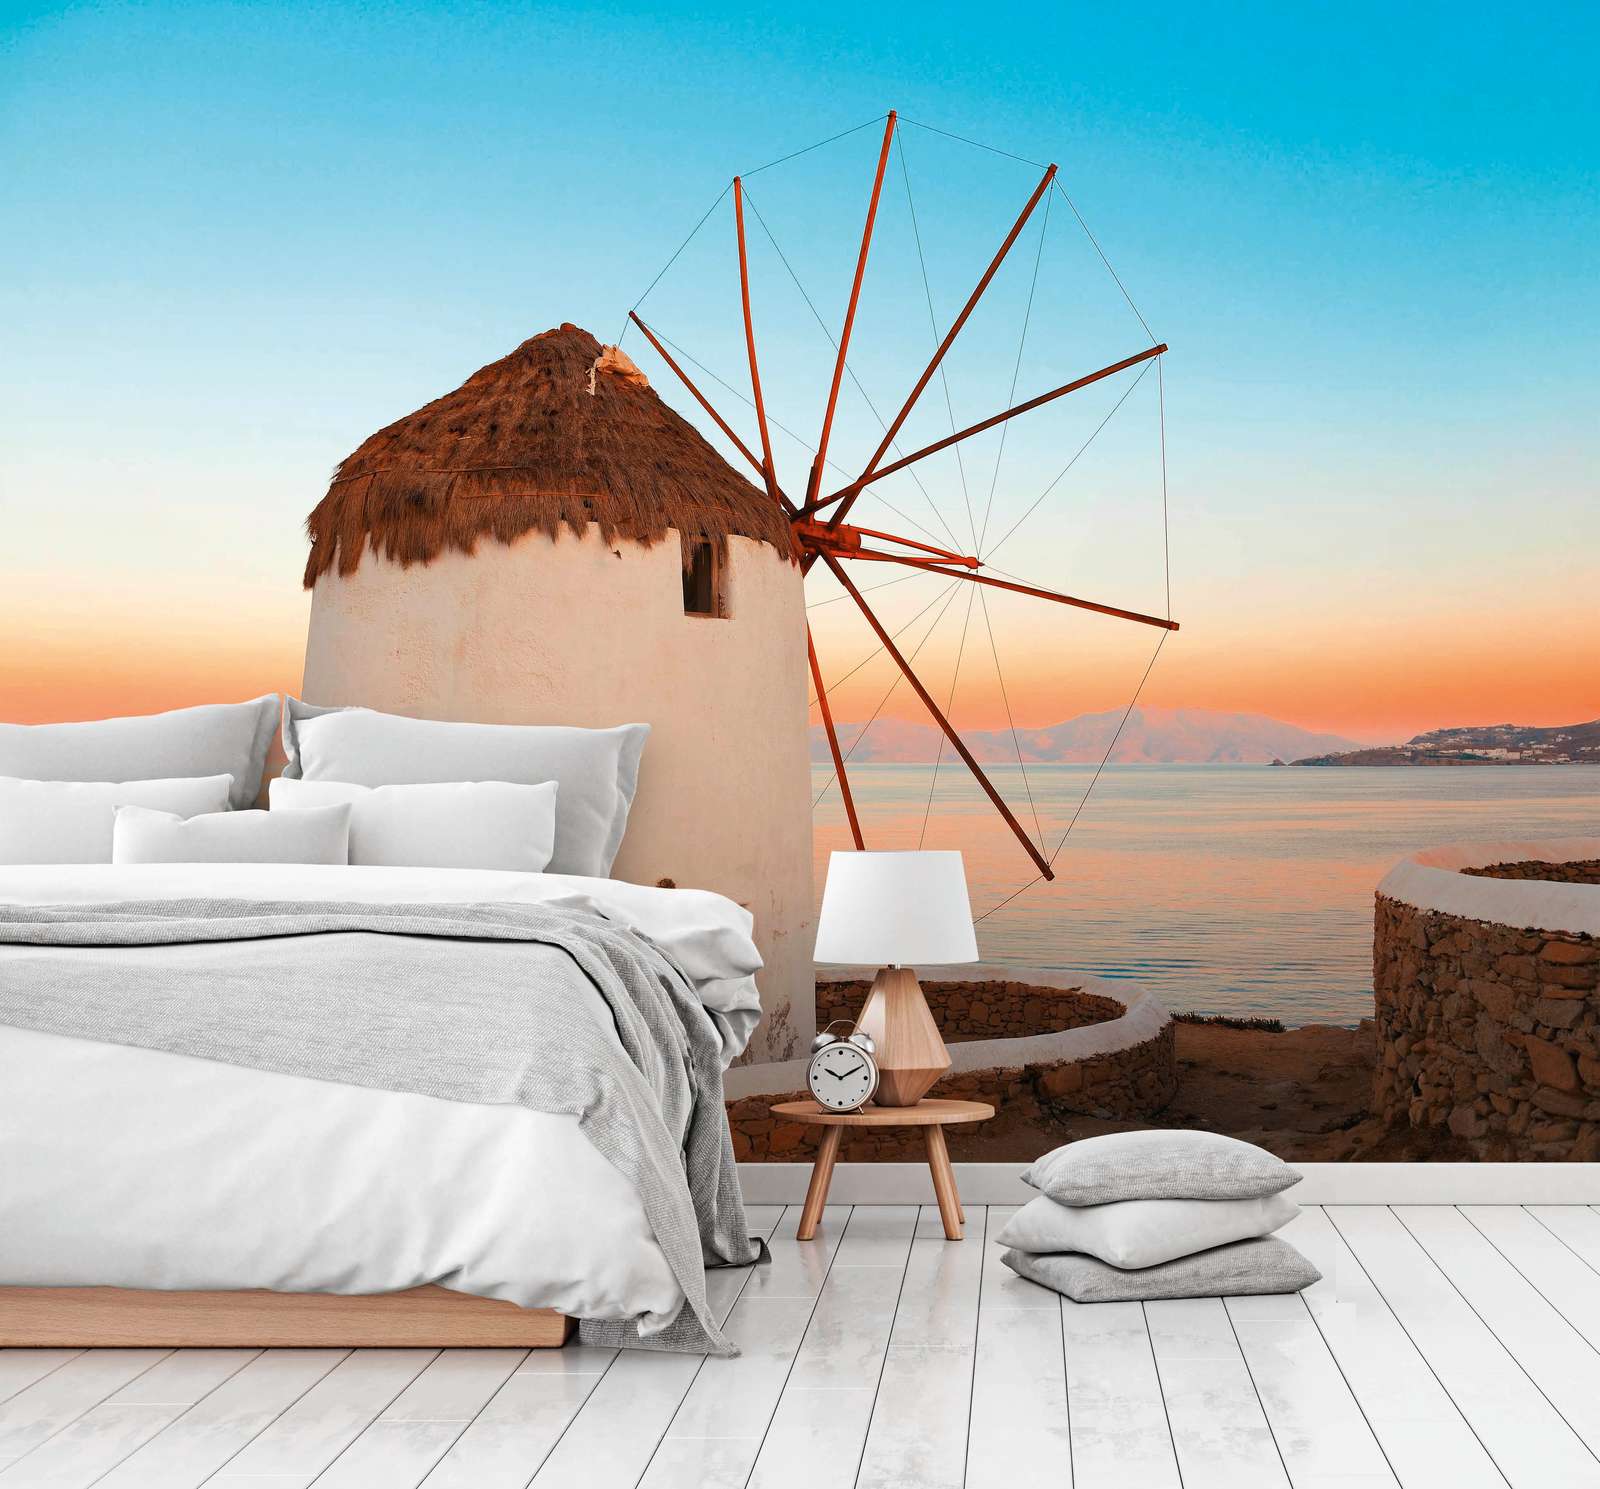             Photo wallpaper Greek windmill on the coast - Blue, Orange, Beige
        